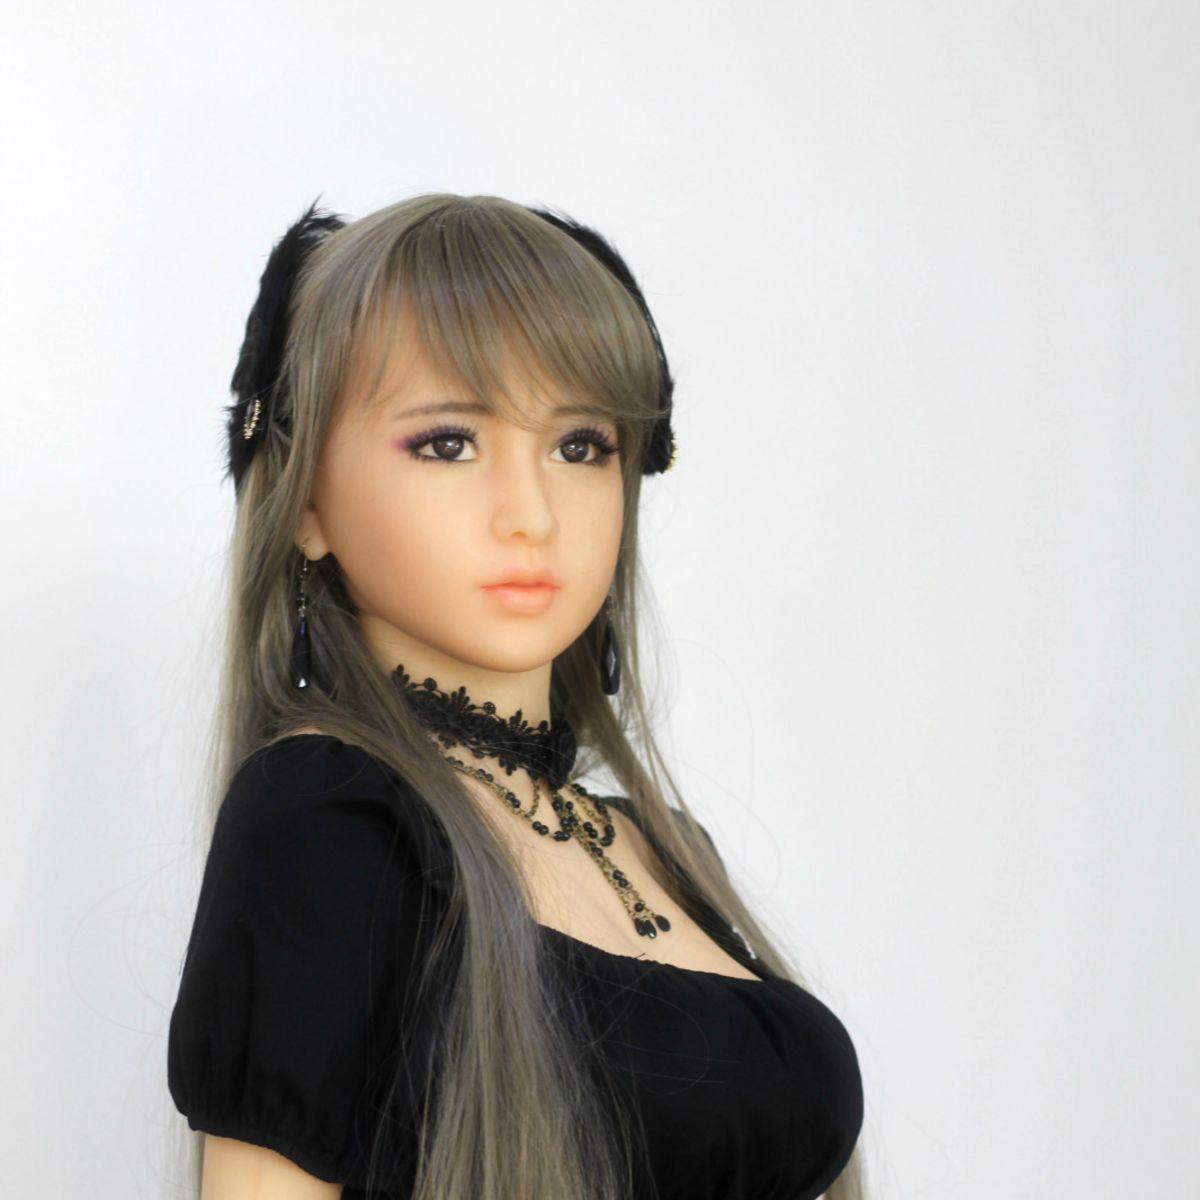 Neodoll Sugar Babe - Meli Head - Sex Doll Head - M16 Compatible - Natural